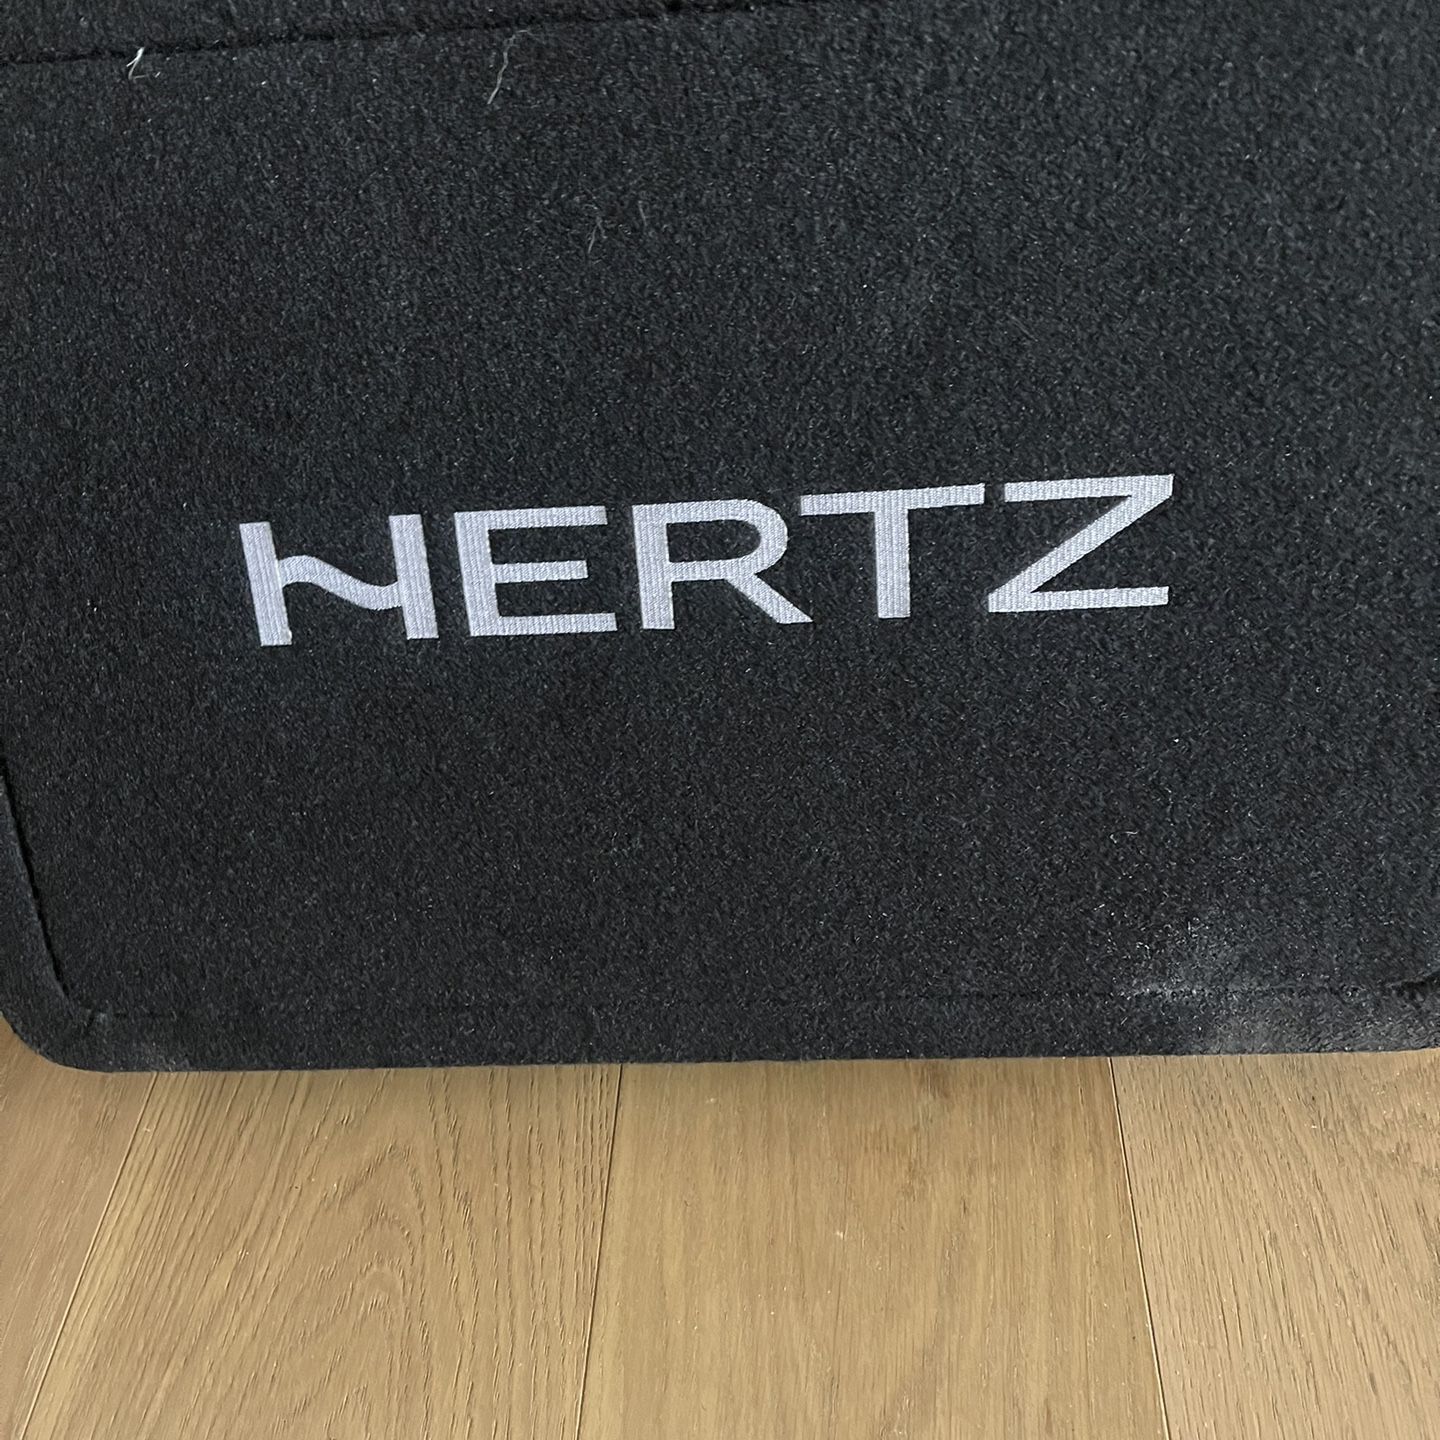 Hertz 10 Inch Subwoofer 